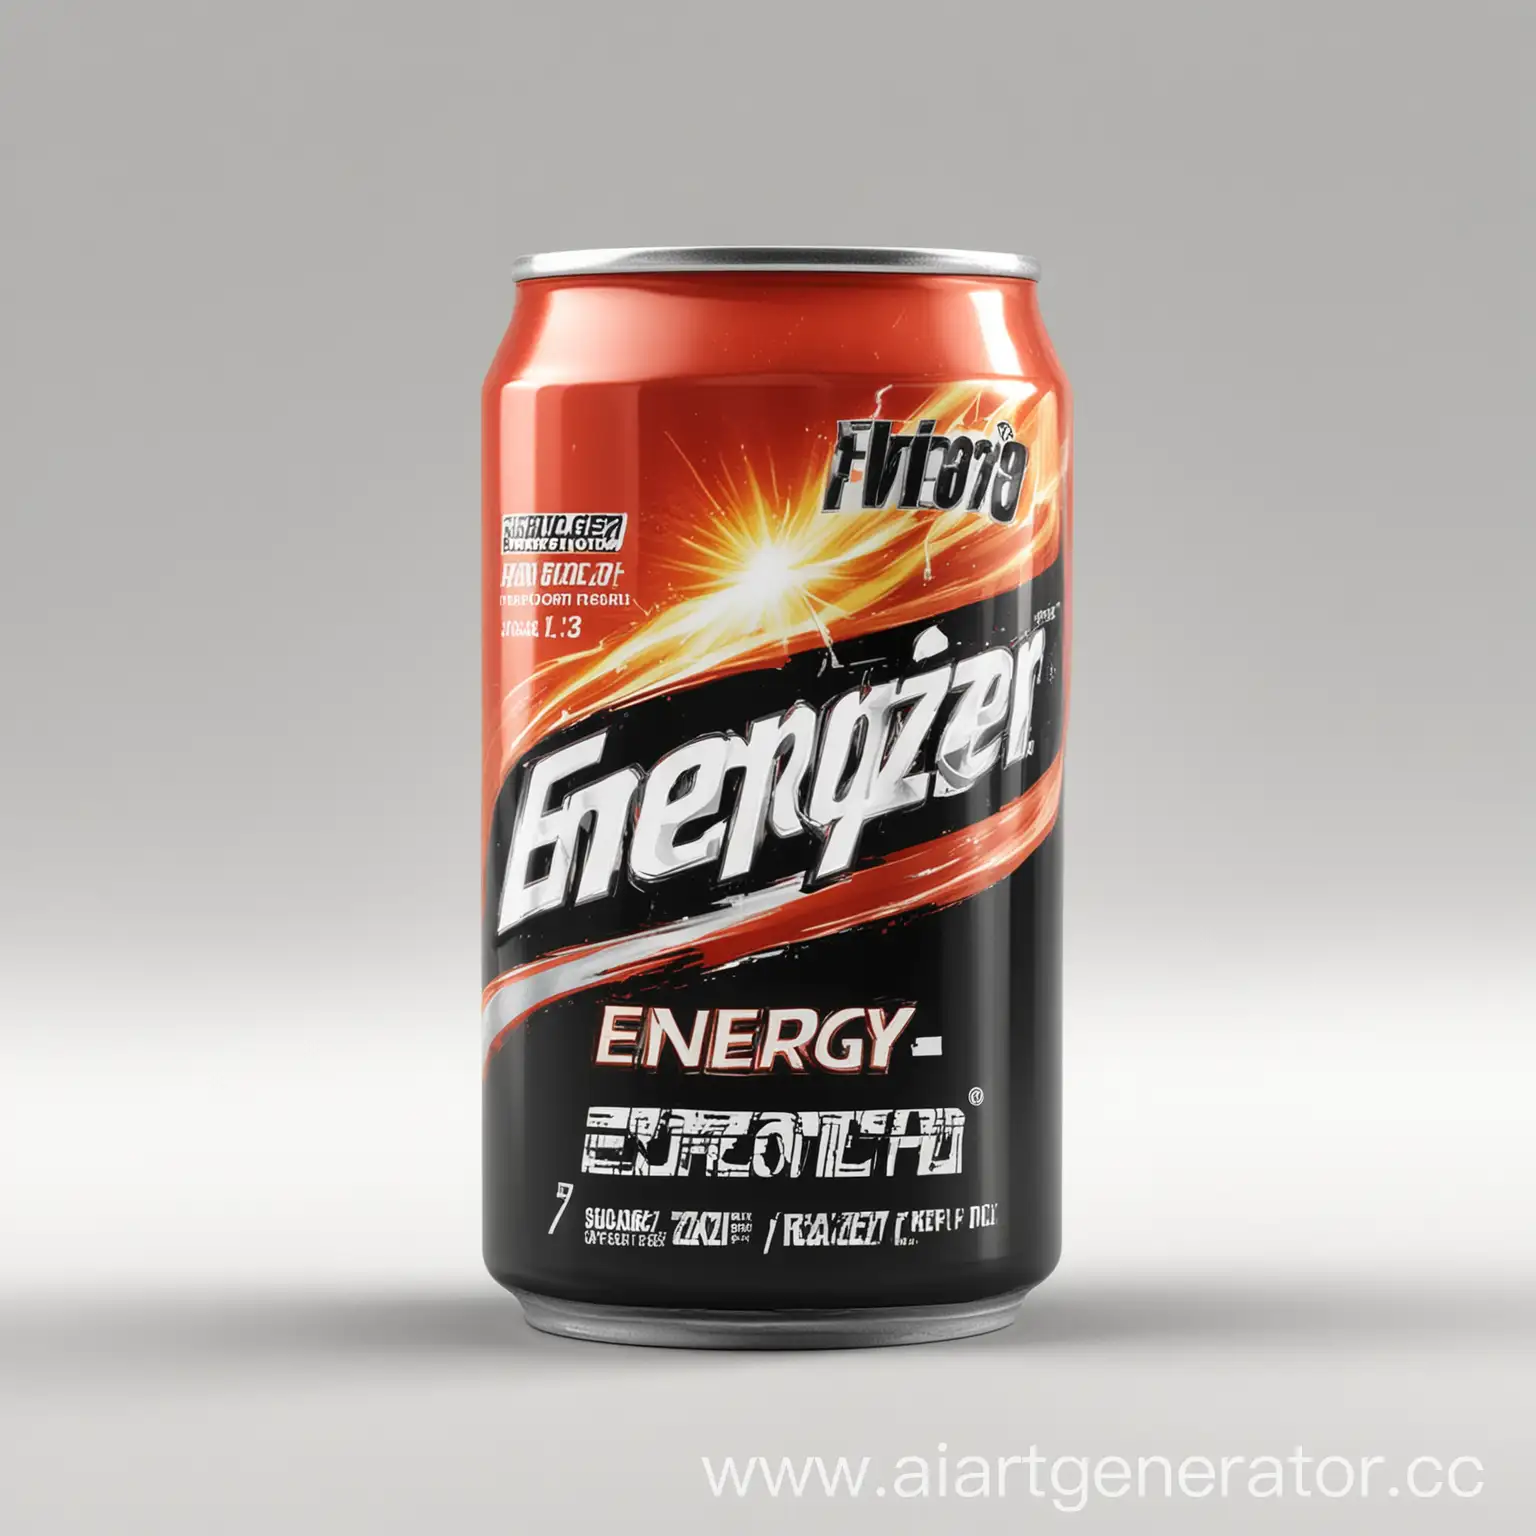 Energizer-ENERGY-Can-Mockup-on-Neutral-White-Background